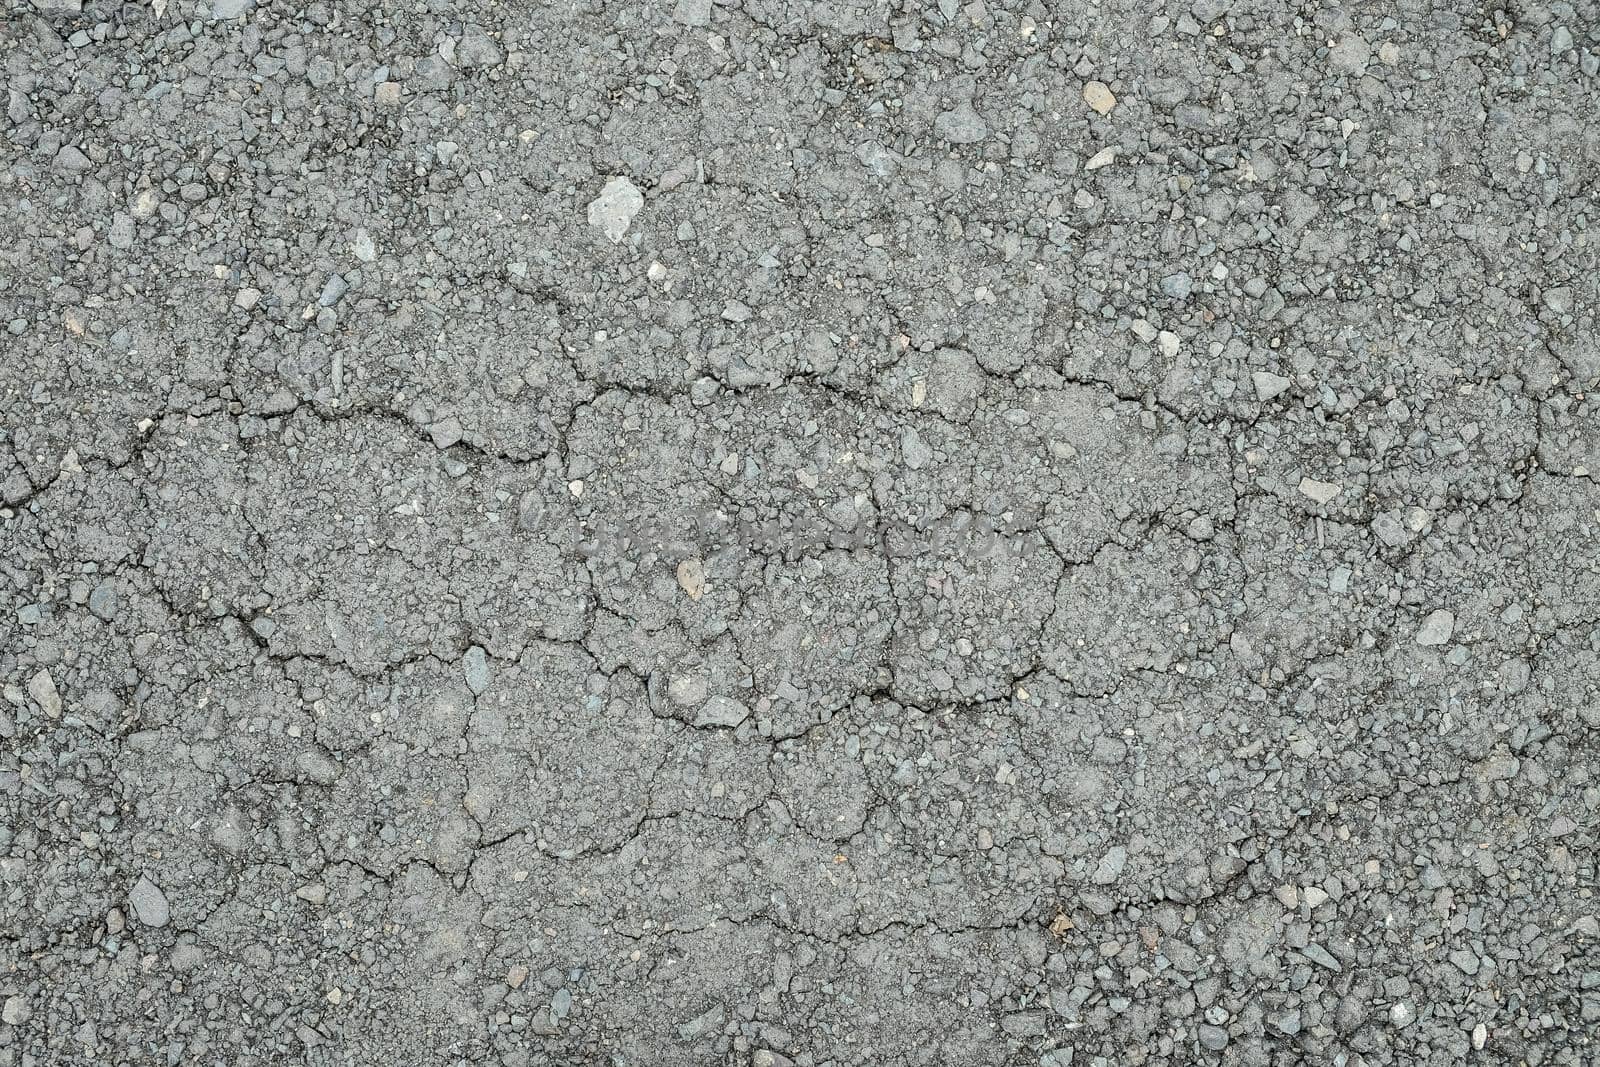 Old worn asphalt road with cracks texture.